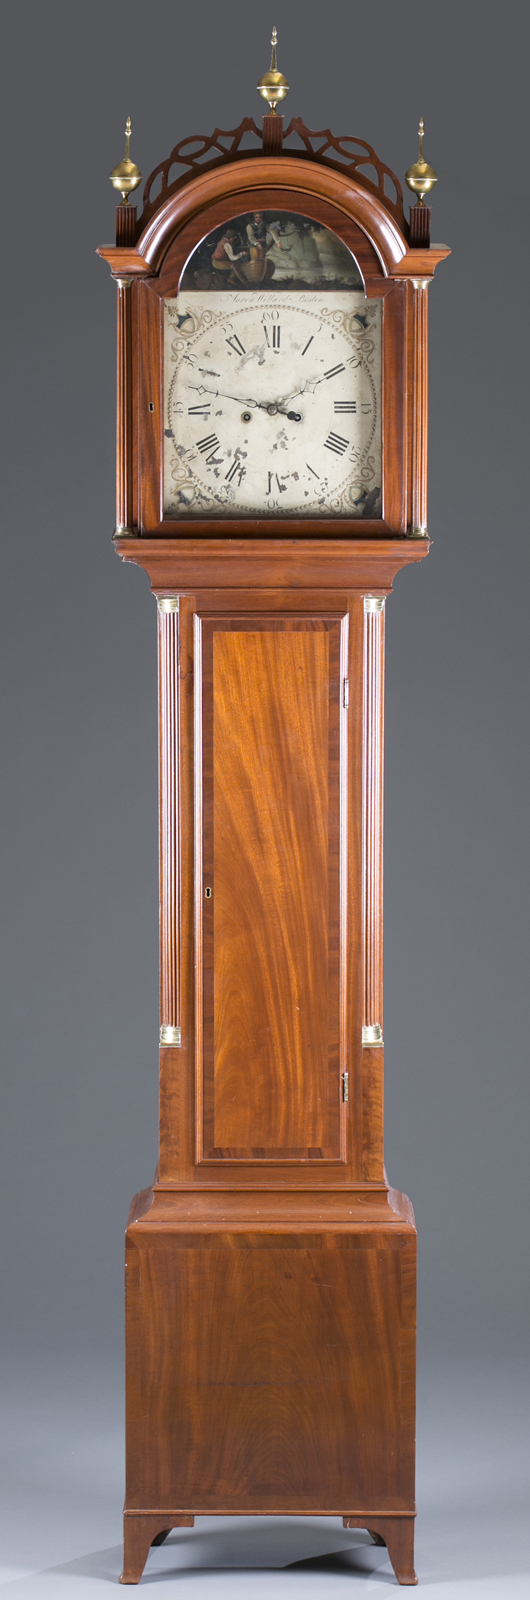 Circa-1800 Aaron Willard tall-case clock, est. $3,000-$5,000. Quinn & Farmer image